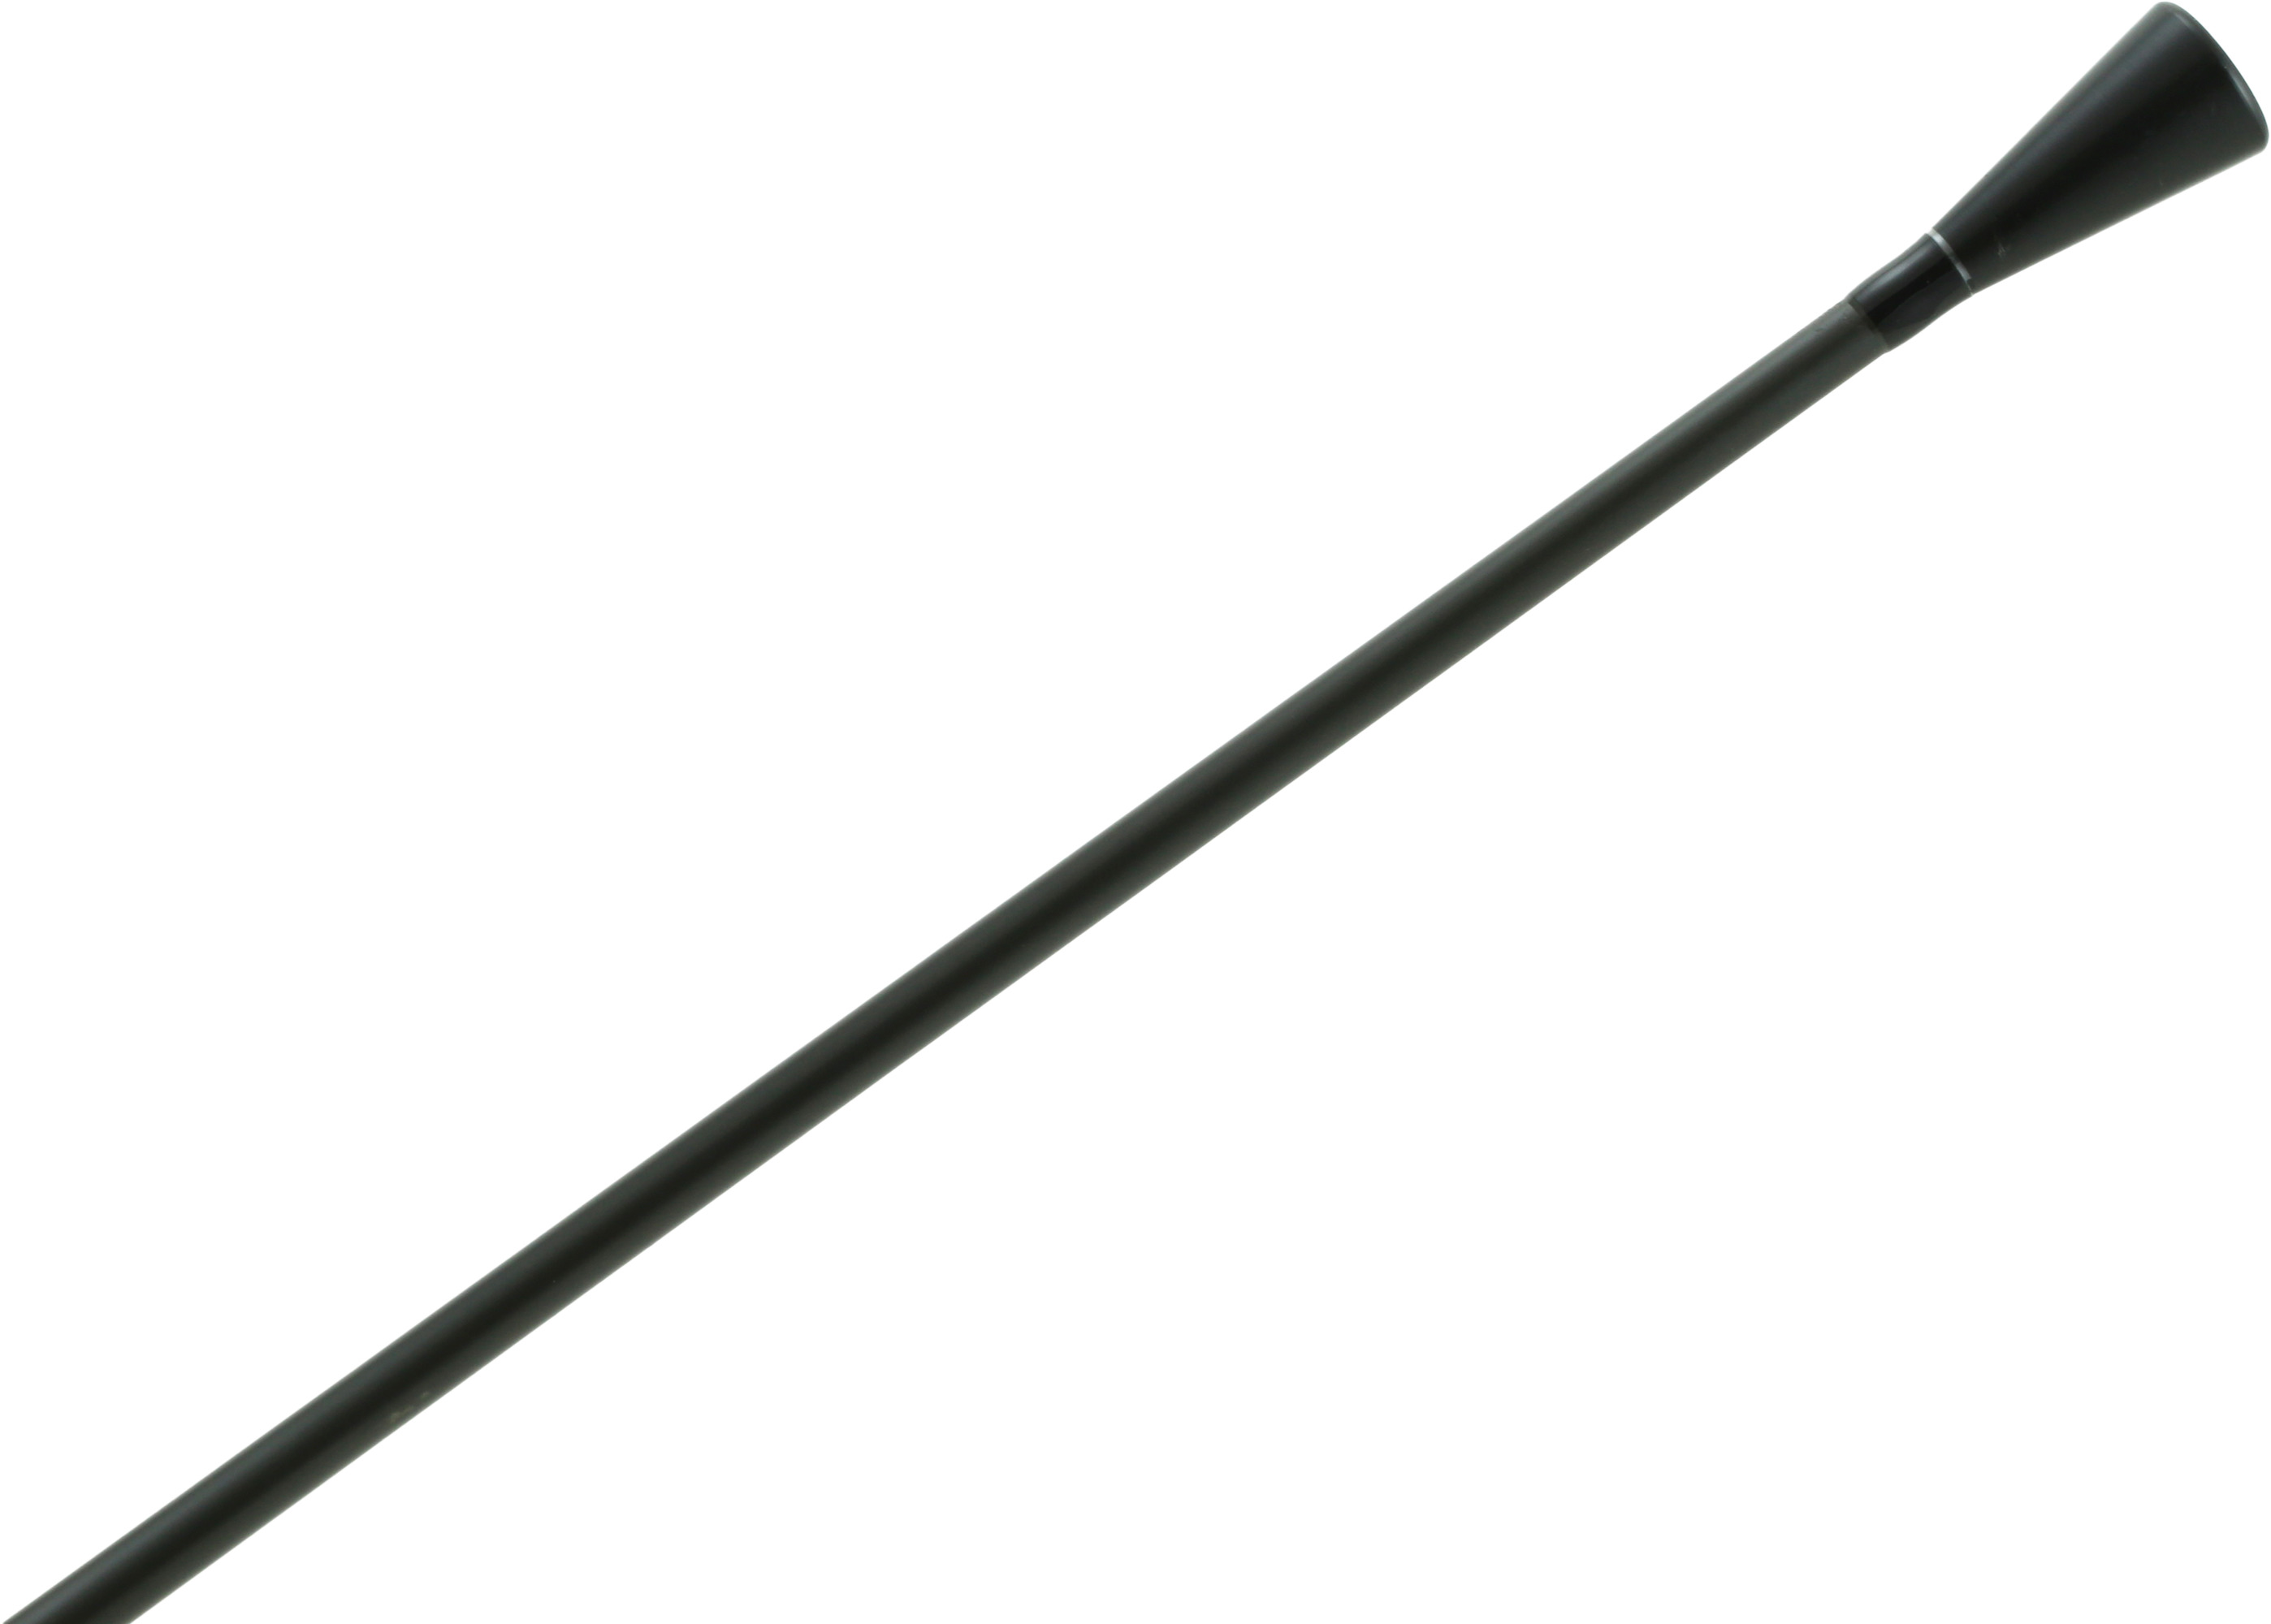 Okuma Cortez Saltwater Casting Rod, Medium, 2 Piece, 15-30 lbs CZ-C-732SBK  , $3.50 Off with Free S&H — CampSaver